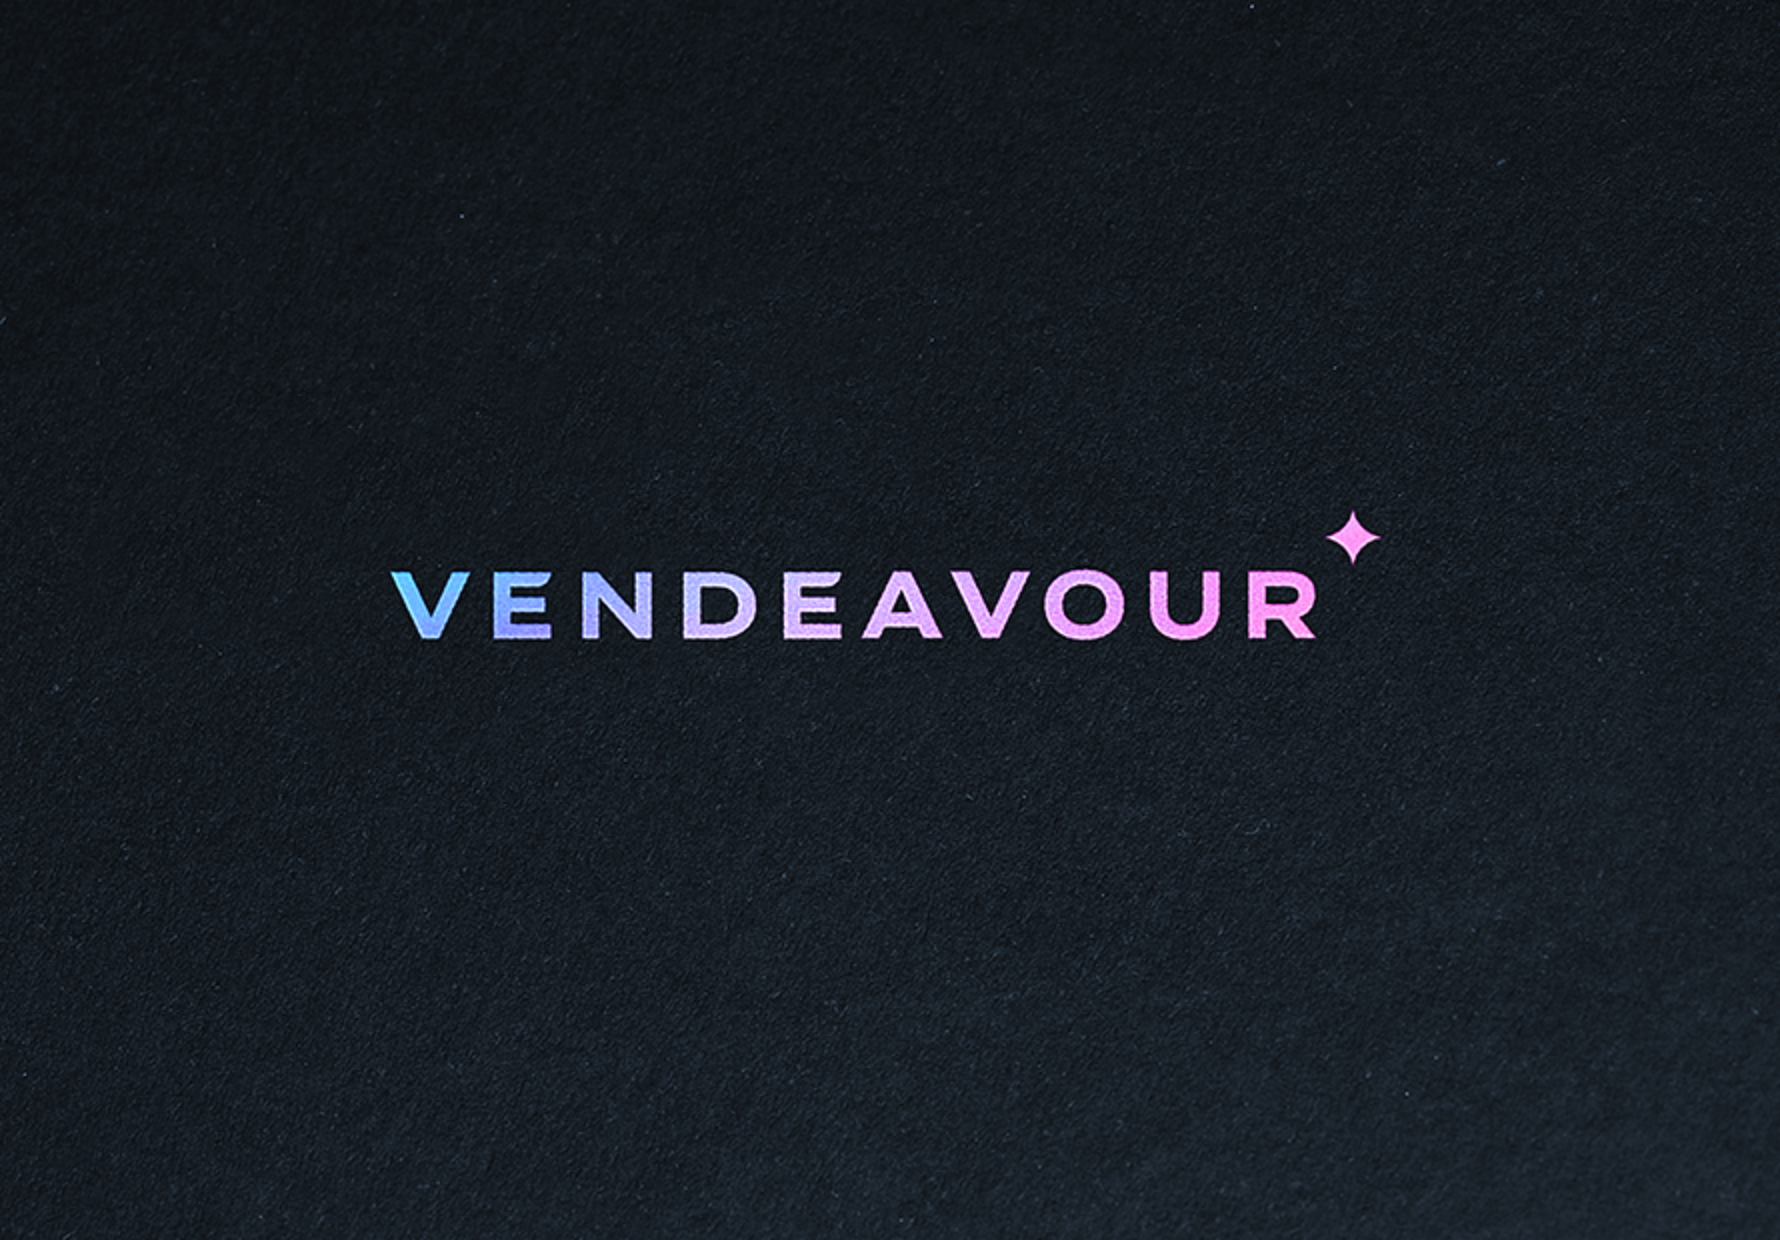 Vendeavour